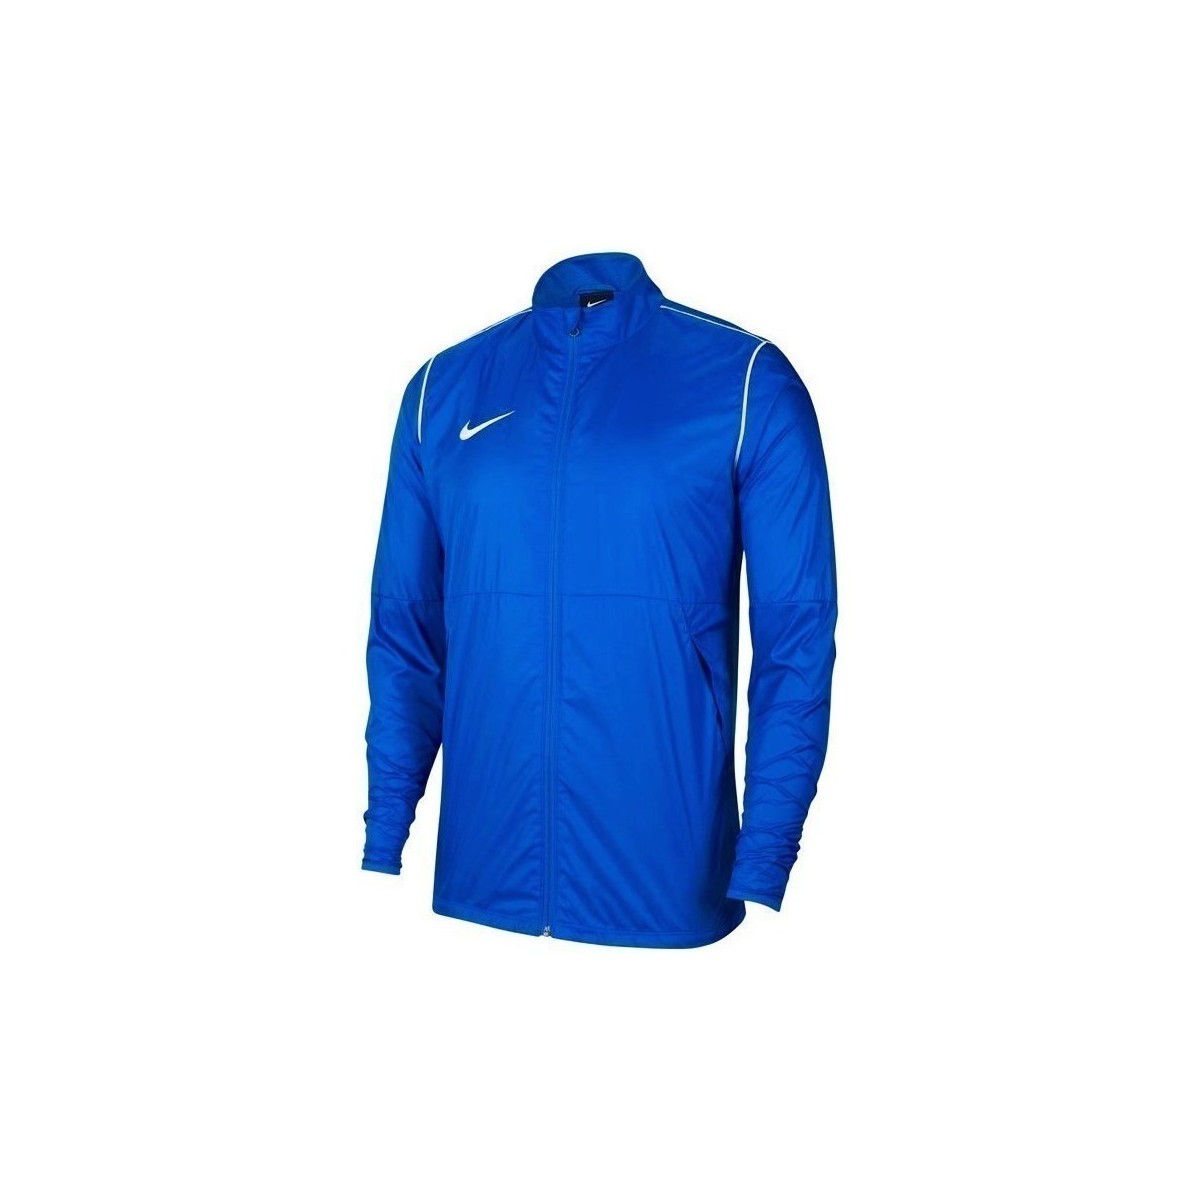 Kleidung Herren Jacken Nike Park 20 Repel Blau